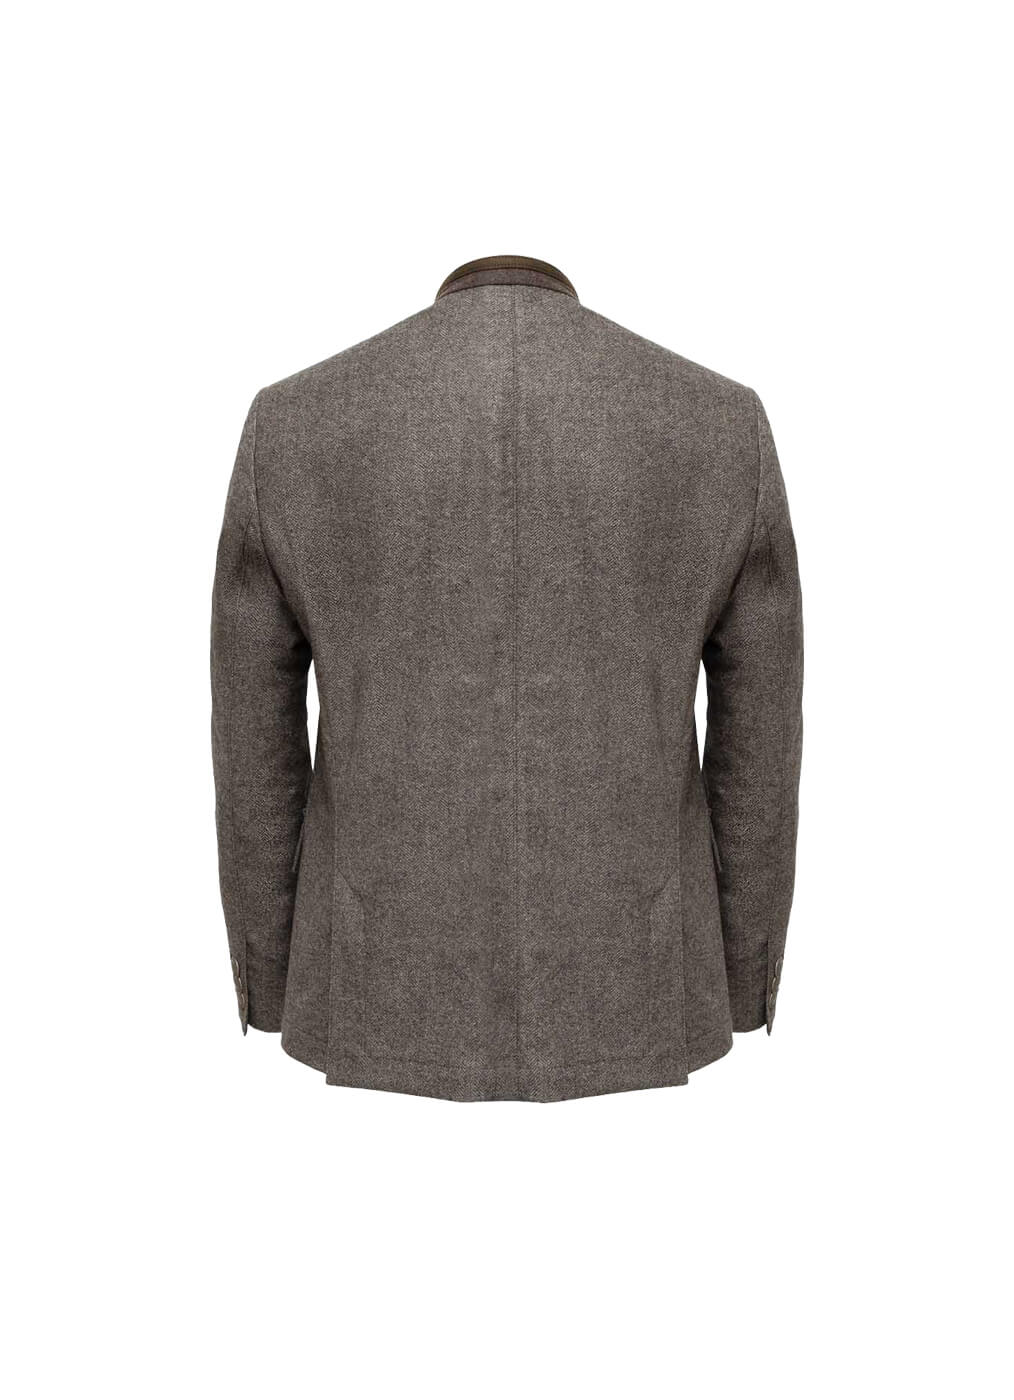 Fabric Jacket Men “Klosters”, bark